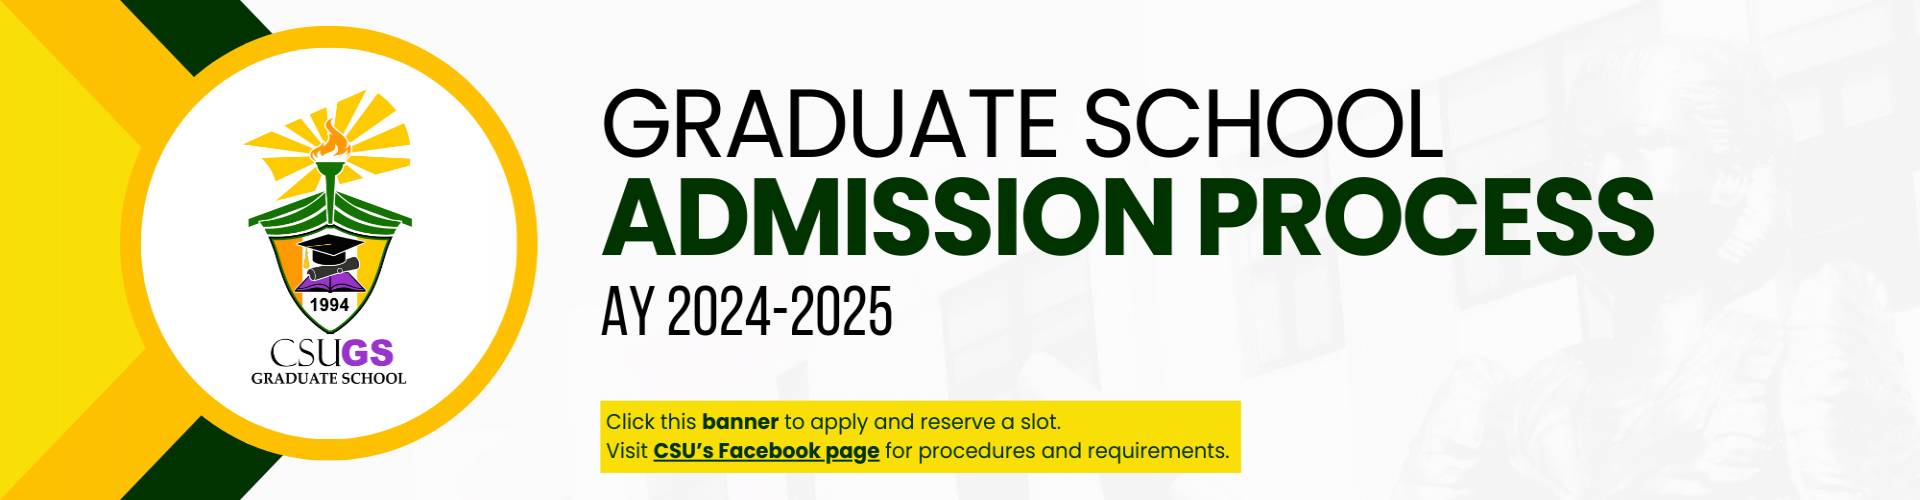 Graduate School Admission Process AY 2024-2025